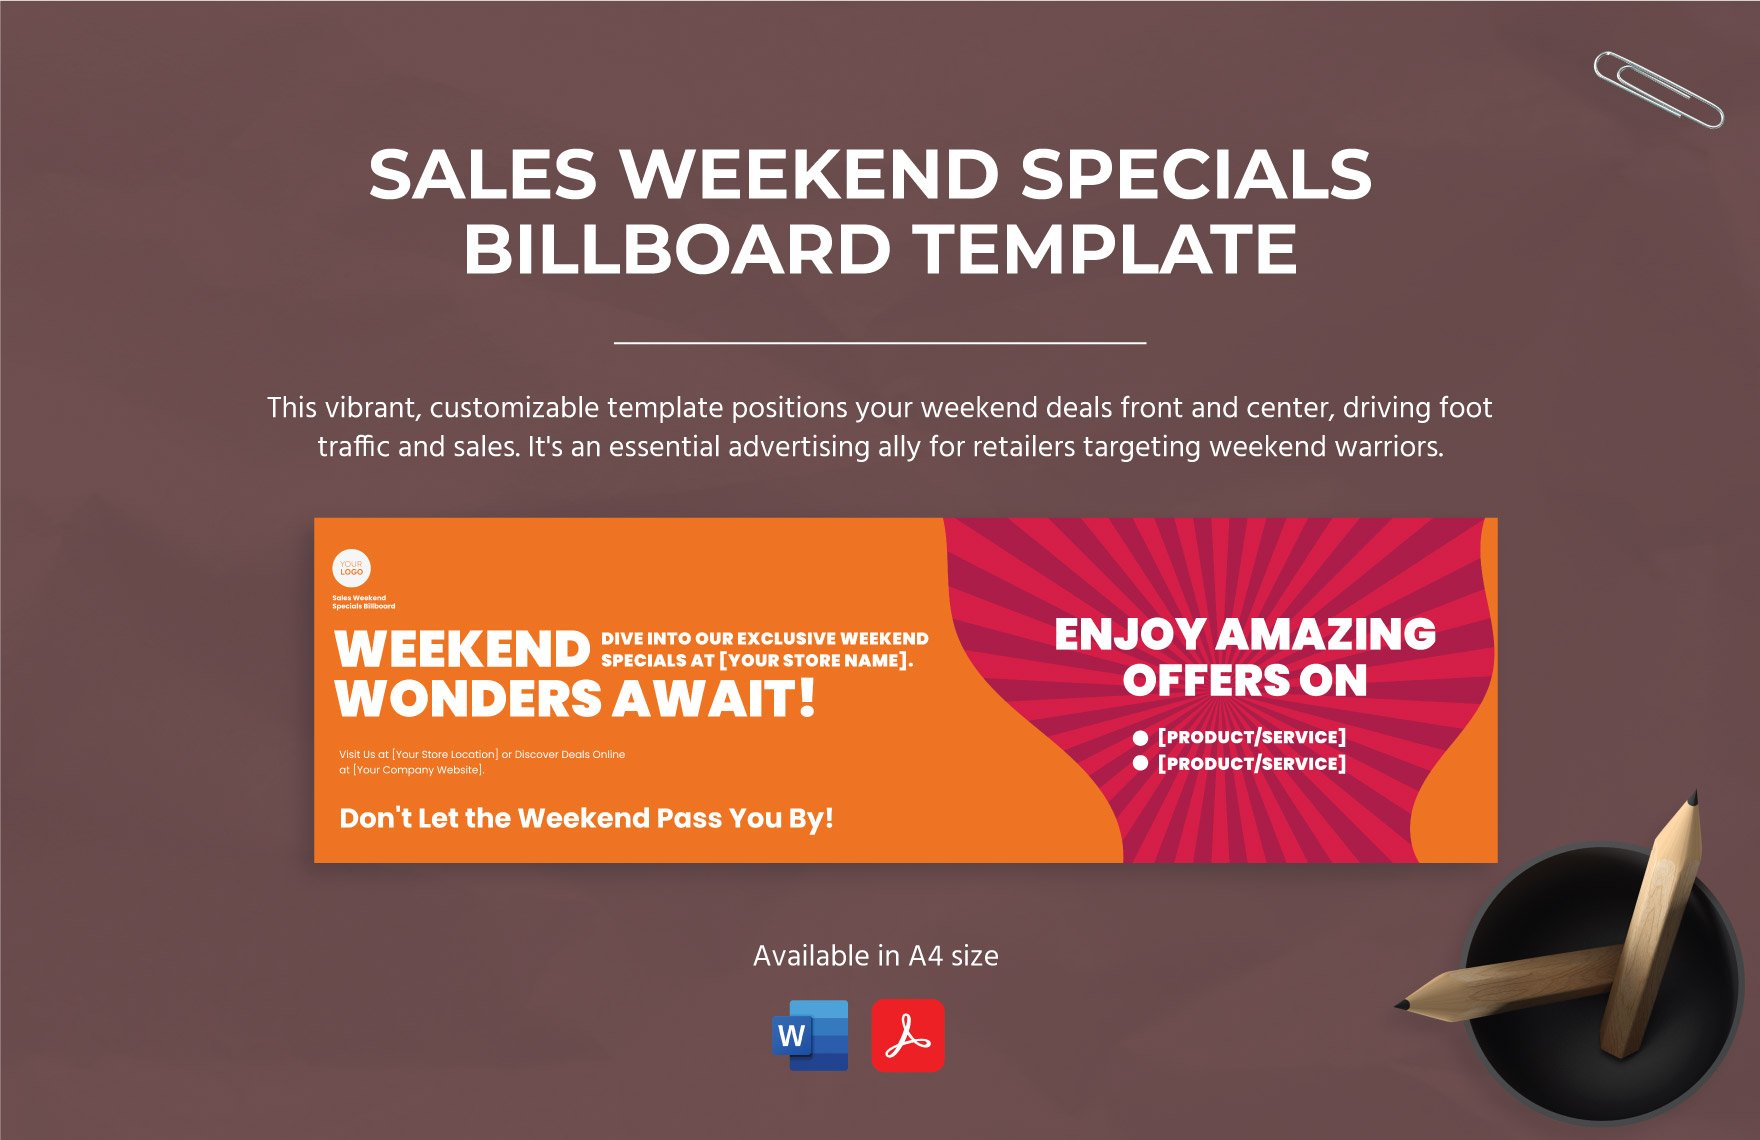 Sales Weekend Specials Billboard Template